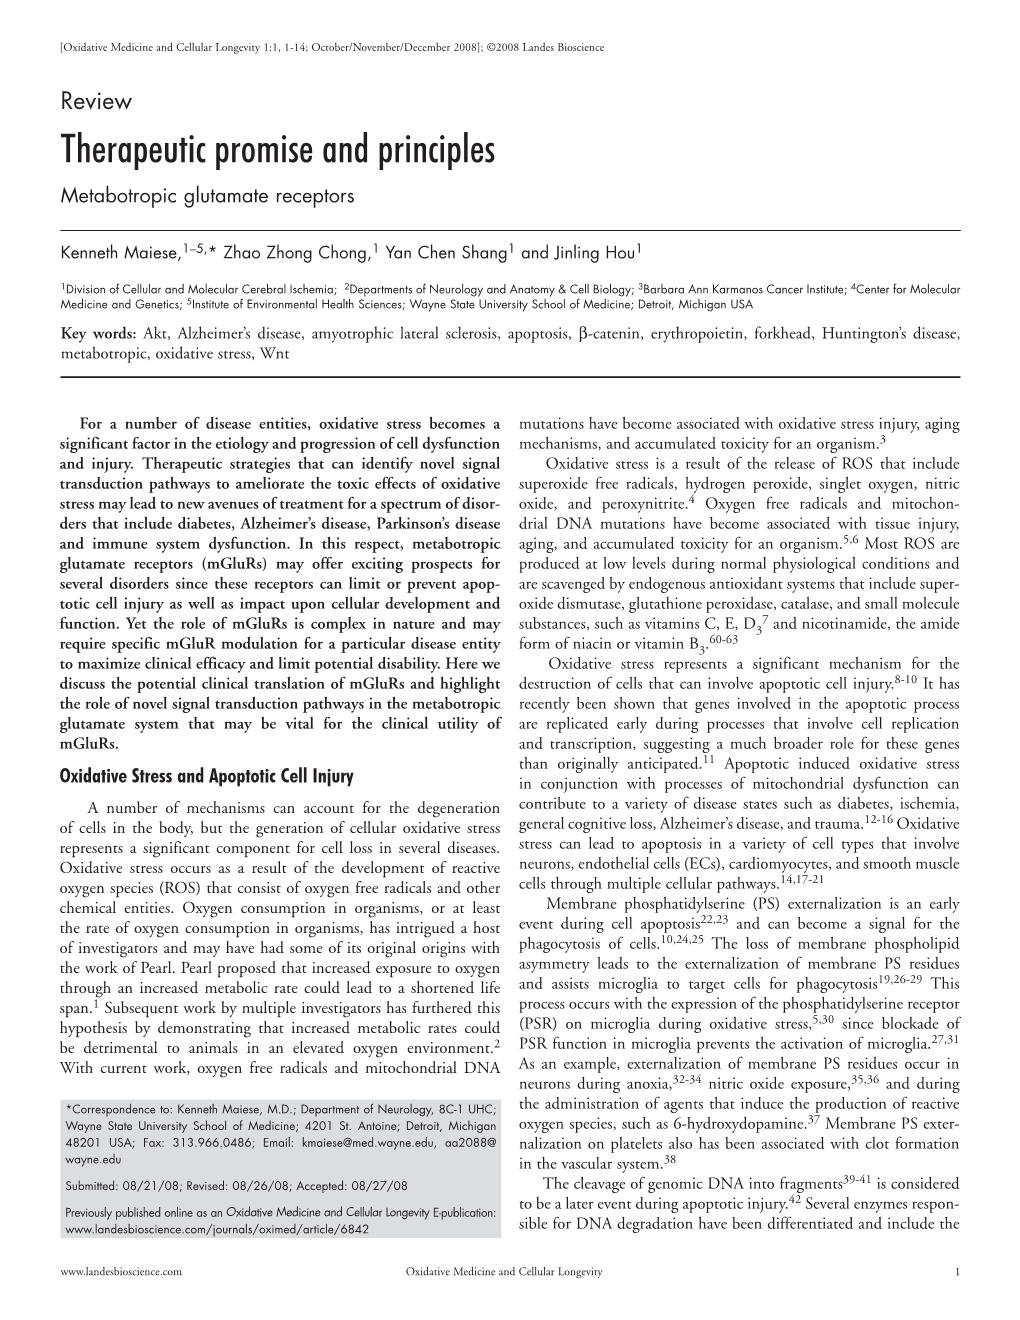 Therapeutic Promise and Principles Metabotropic Glutamate Receptors